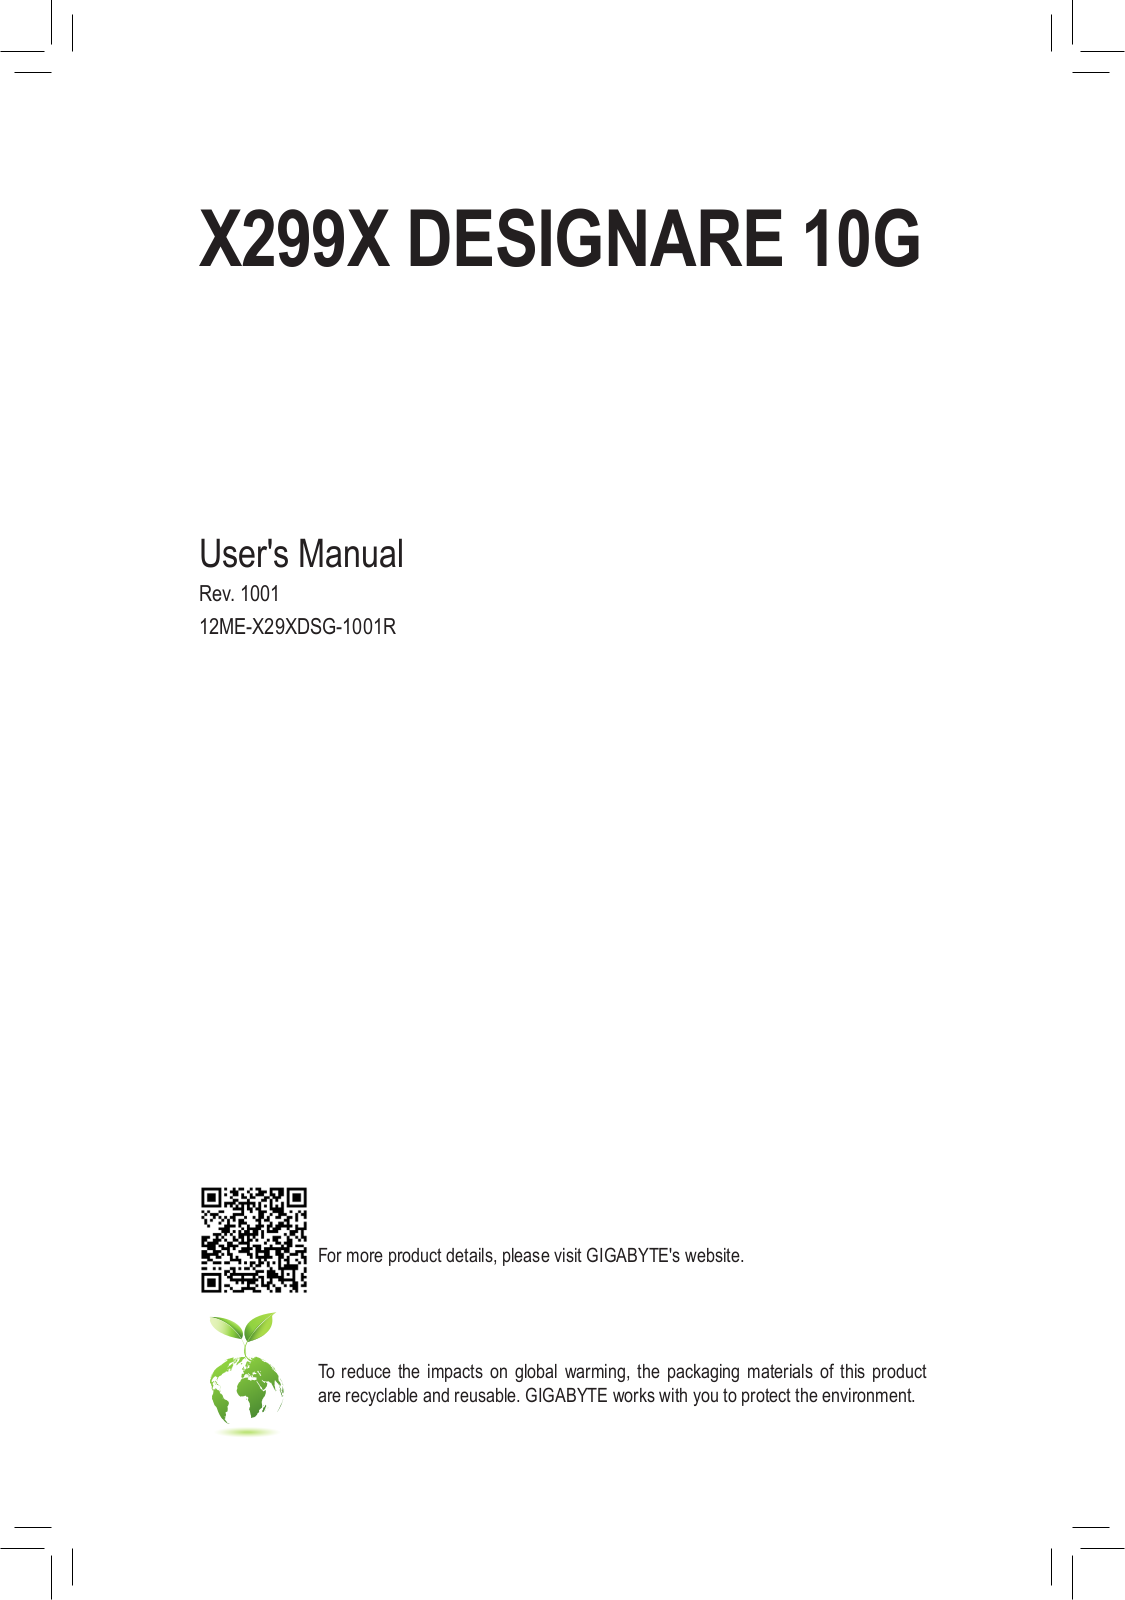 Gigabyte X299X Designare 10G Service Manual